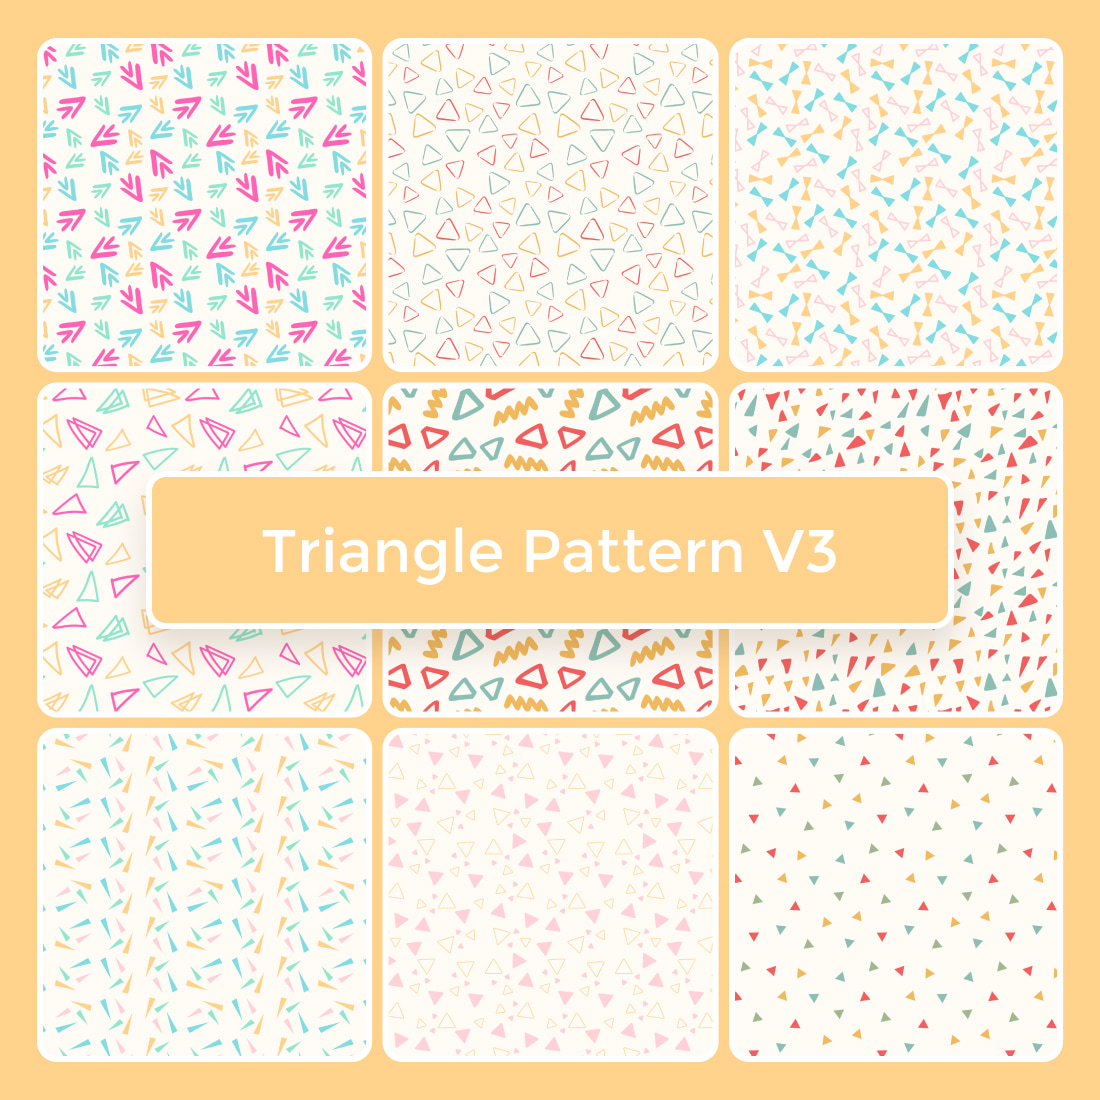 Triangle Pattern V3.